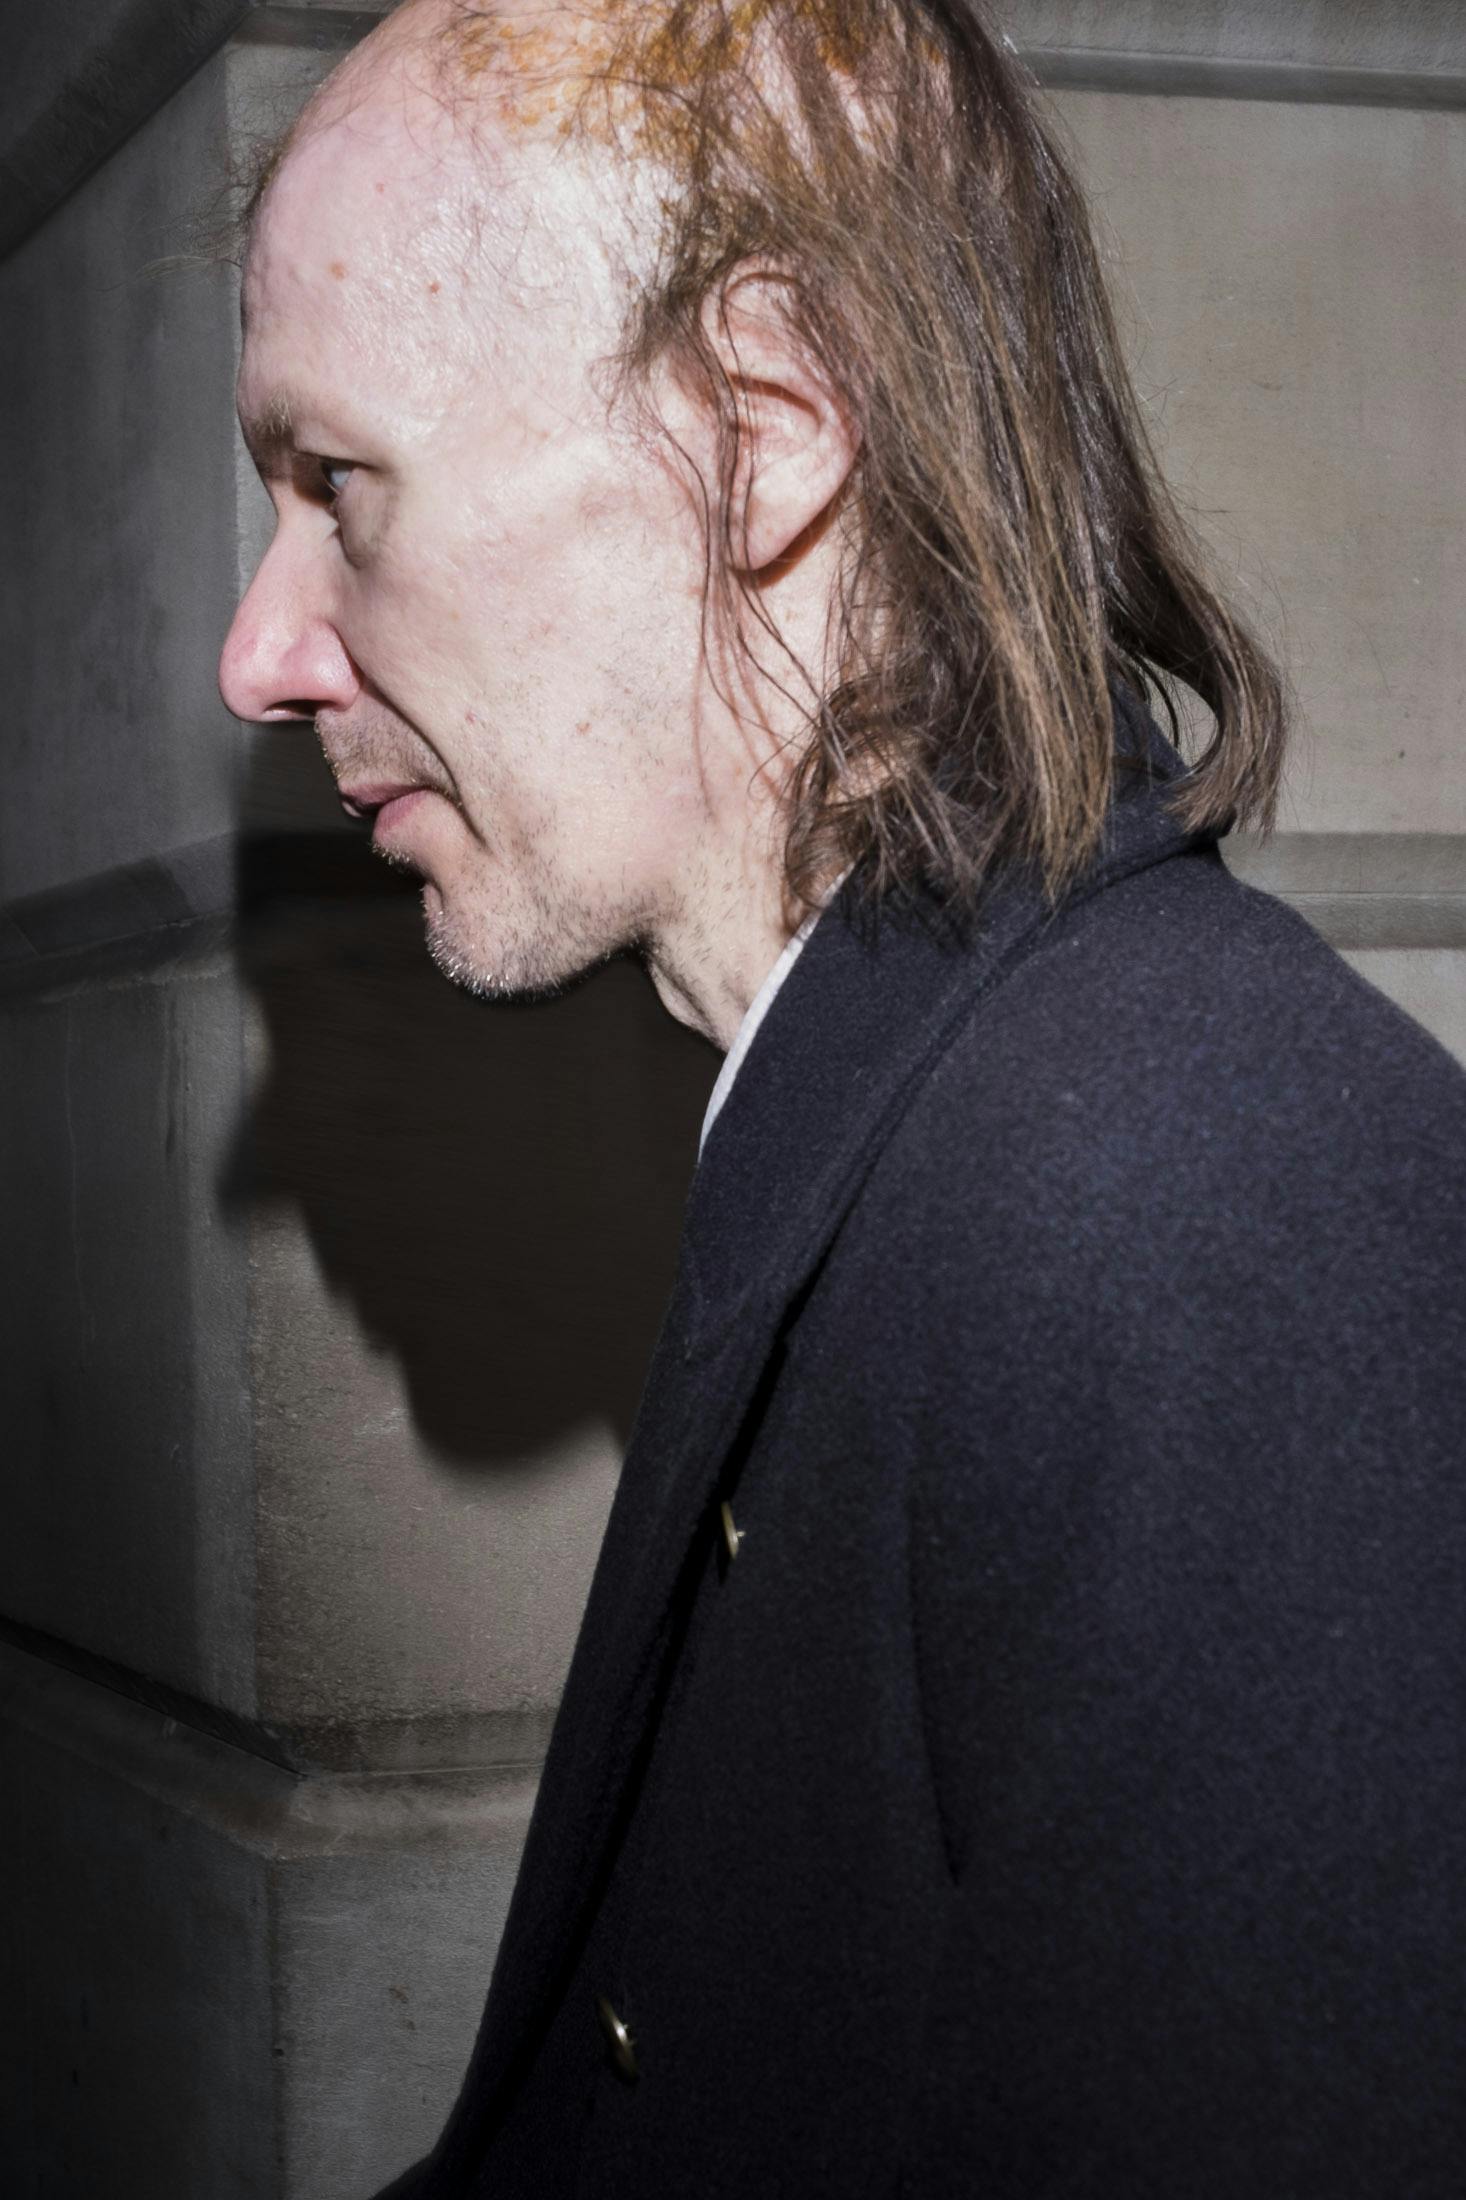 Man with hair loss walking in Bank, London.